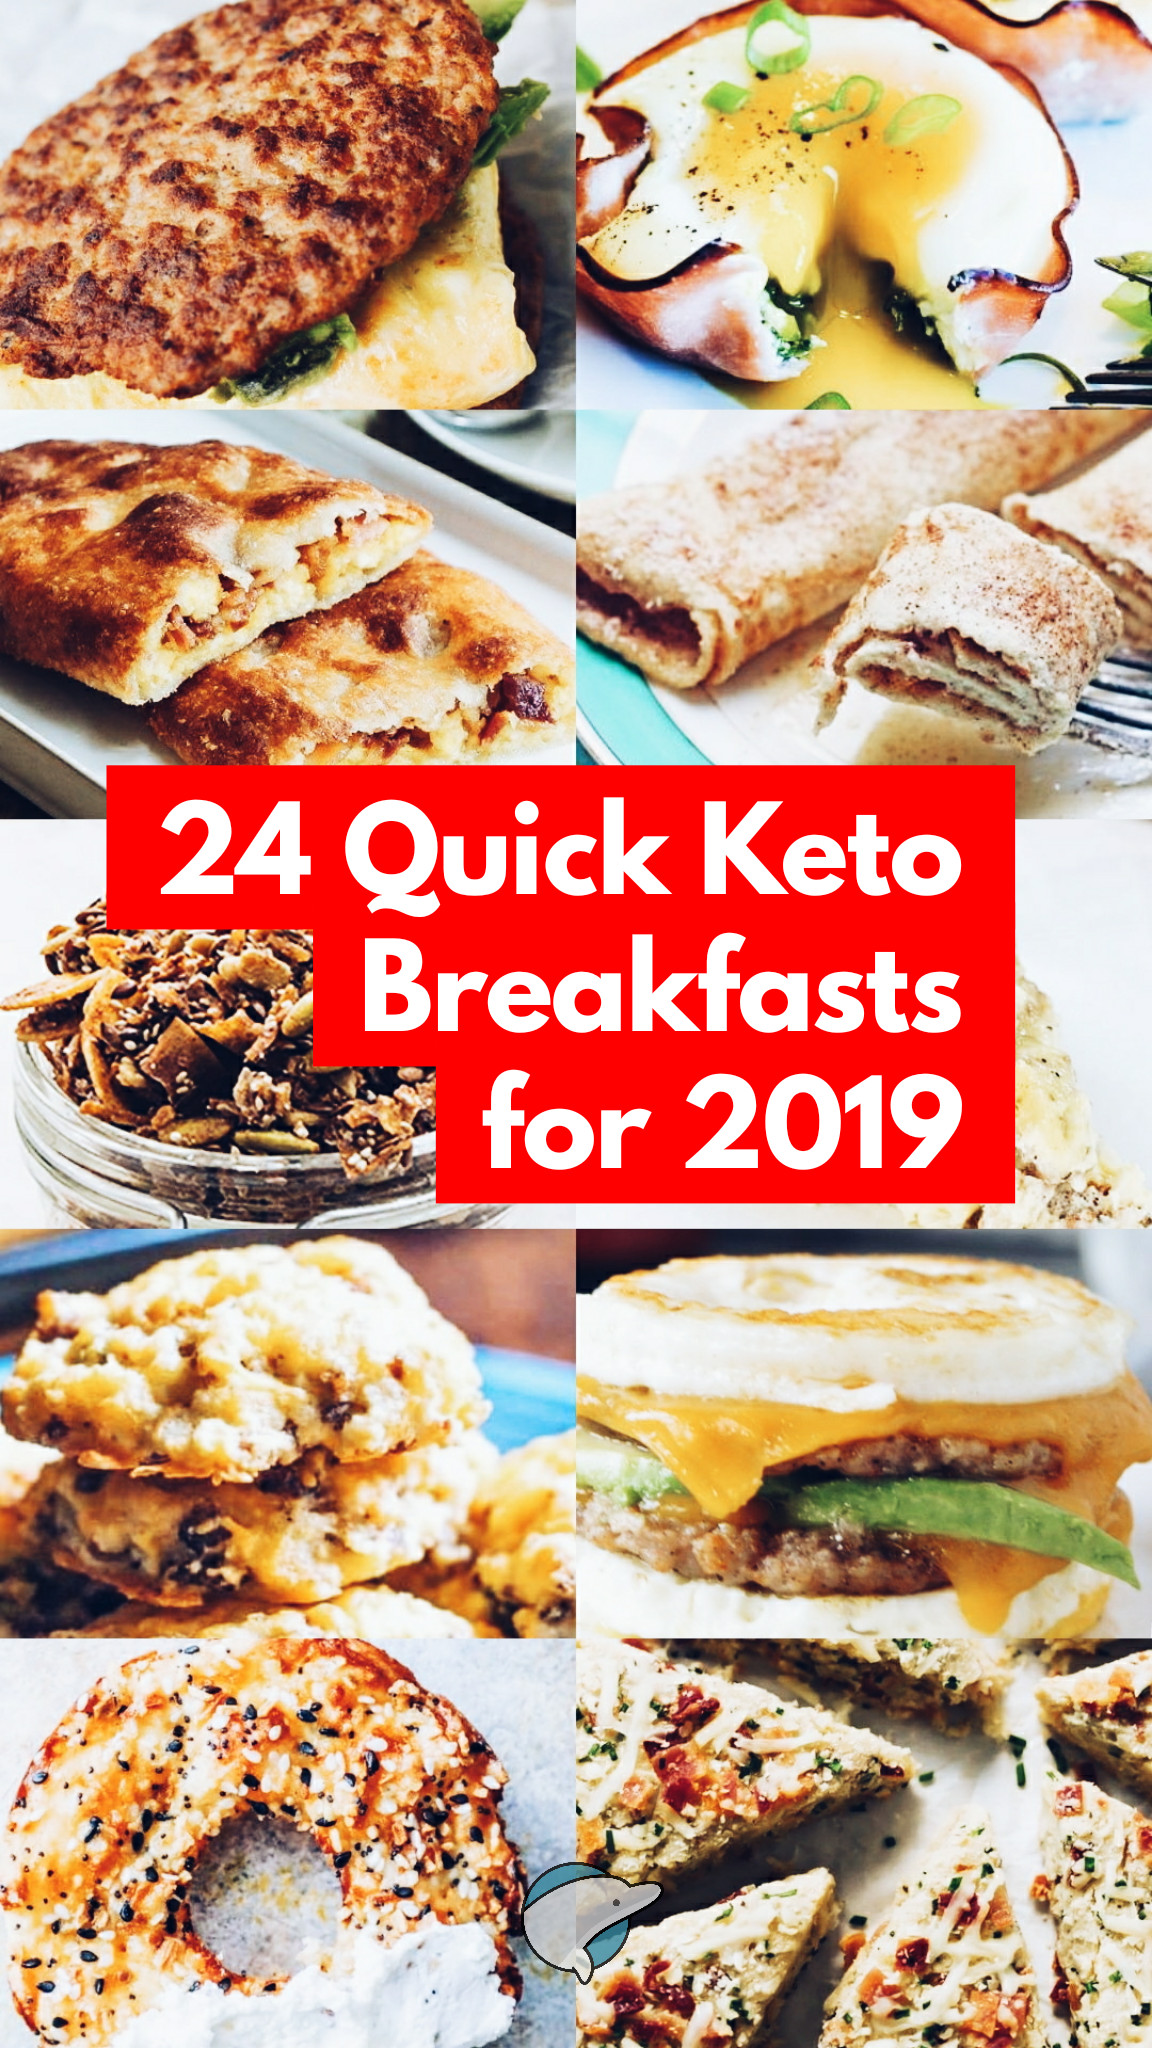 Keto Diet Recipes Breakfast Mornings
 25 Keto Breakfast Recipes for 2019